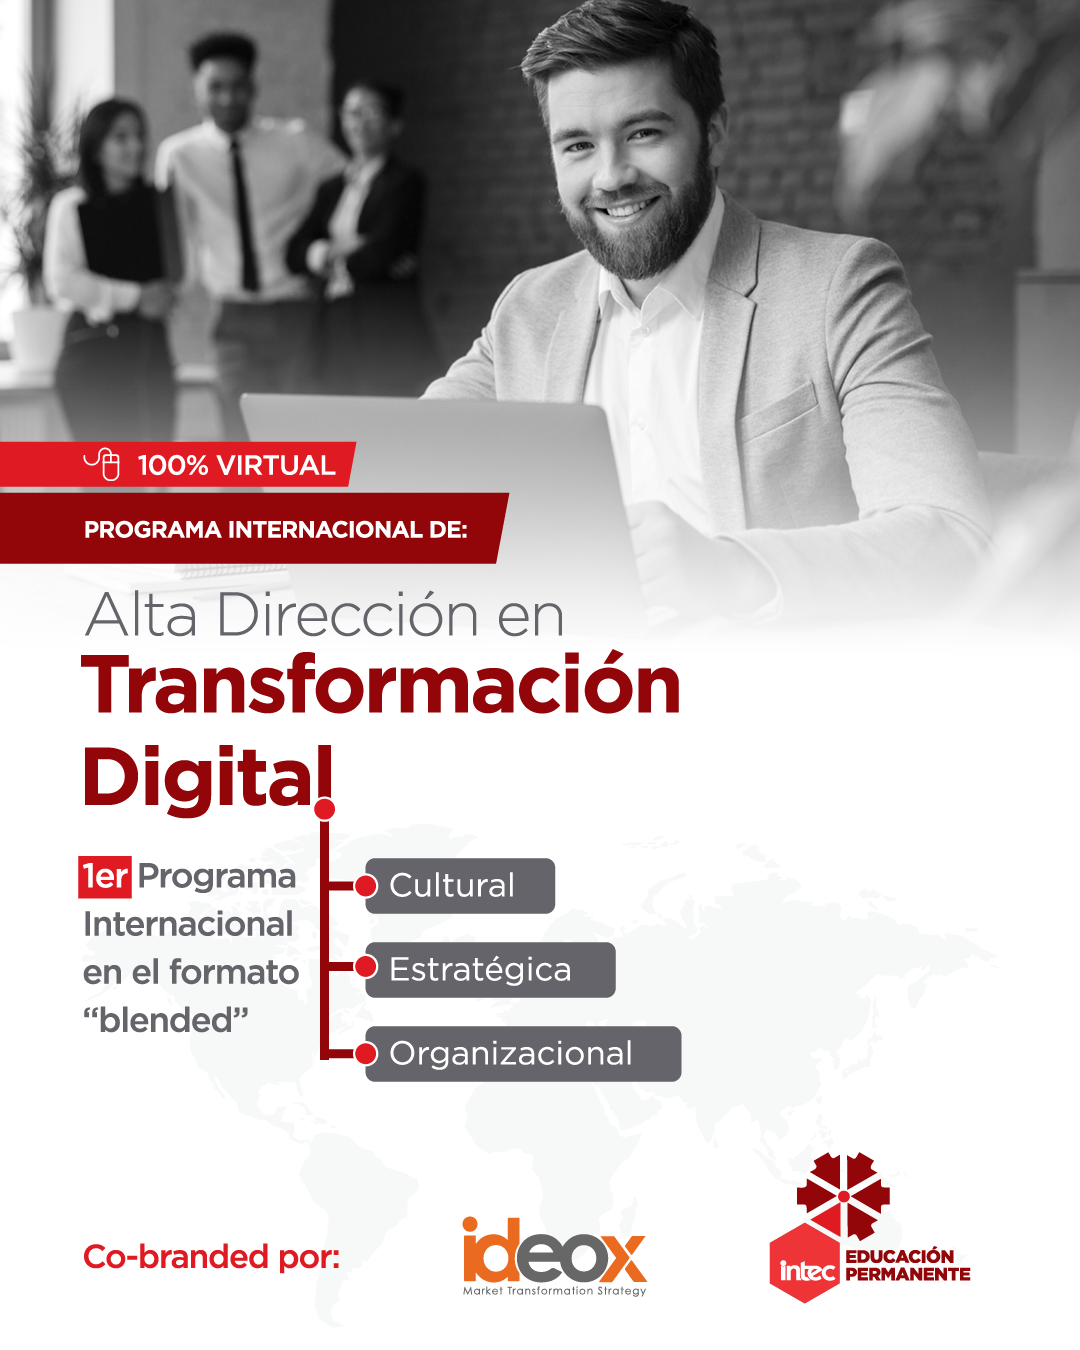 Permanent Education of INTEC will teach a program in Senior Management in Digital Transformation